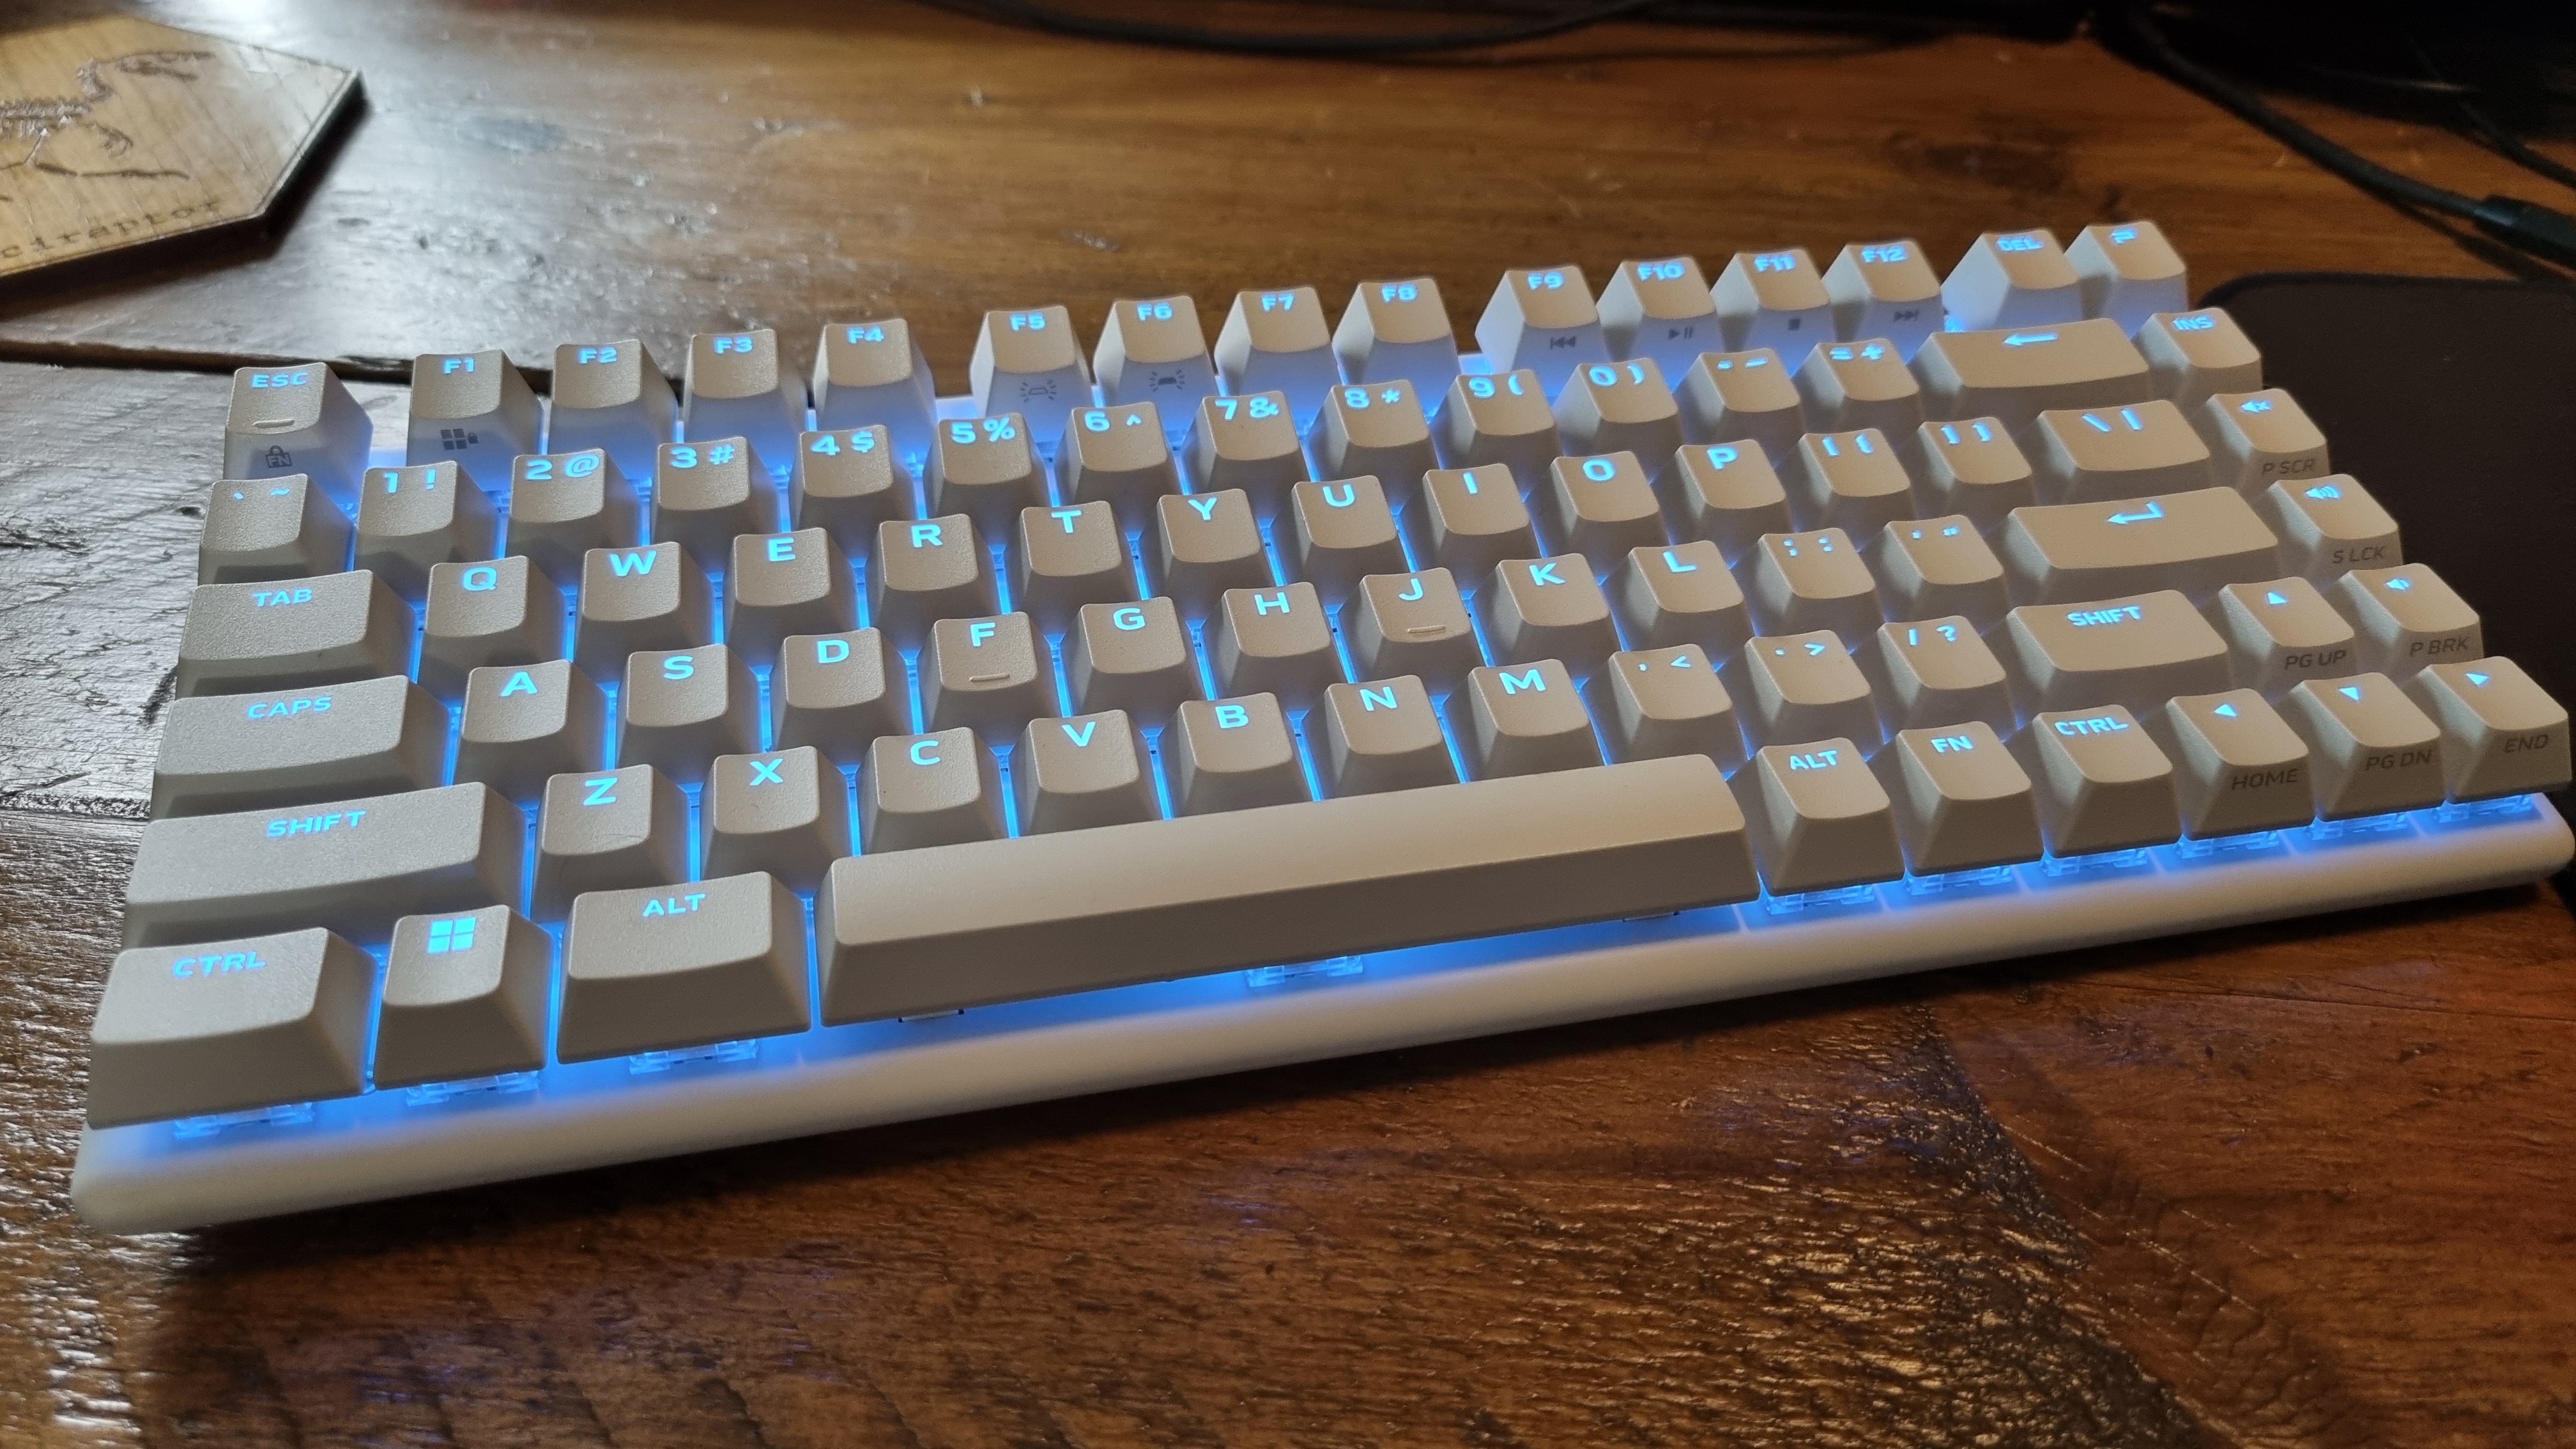 The Alienware Pro Wireless Gaming Keyboard, lit up in blue on a wooden desk